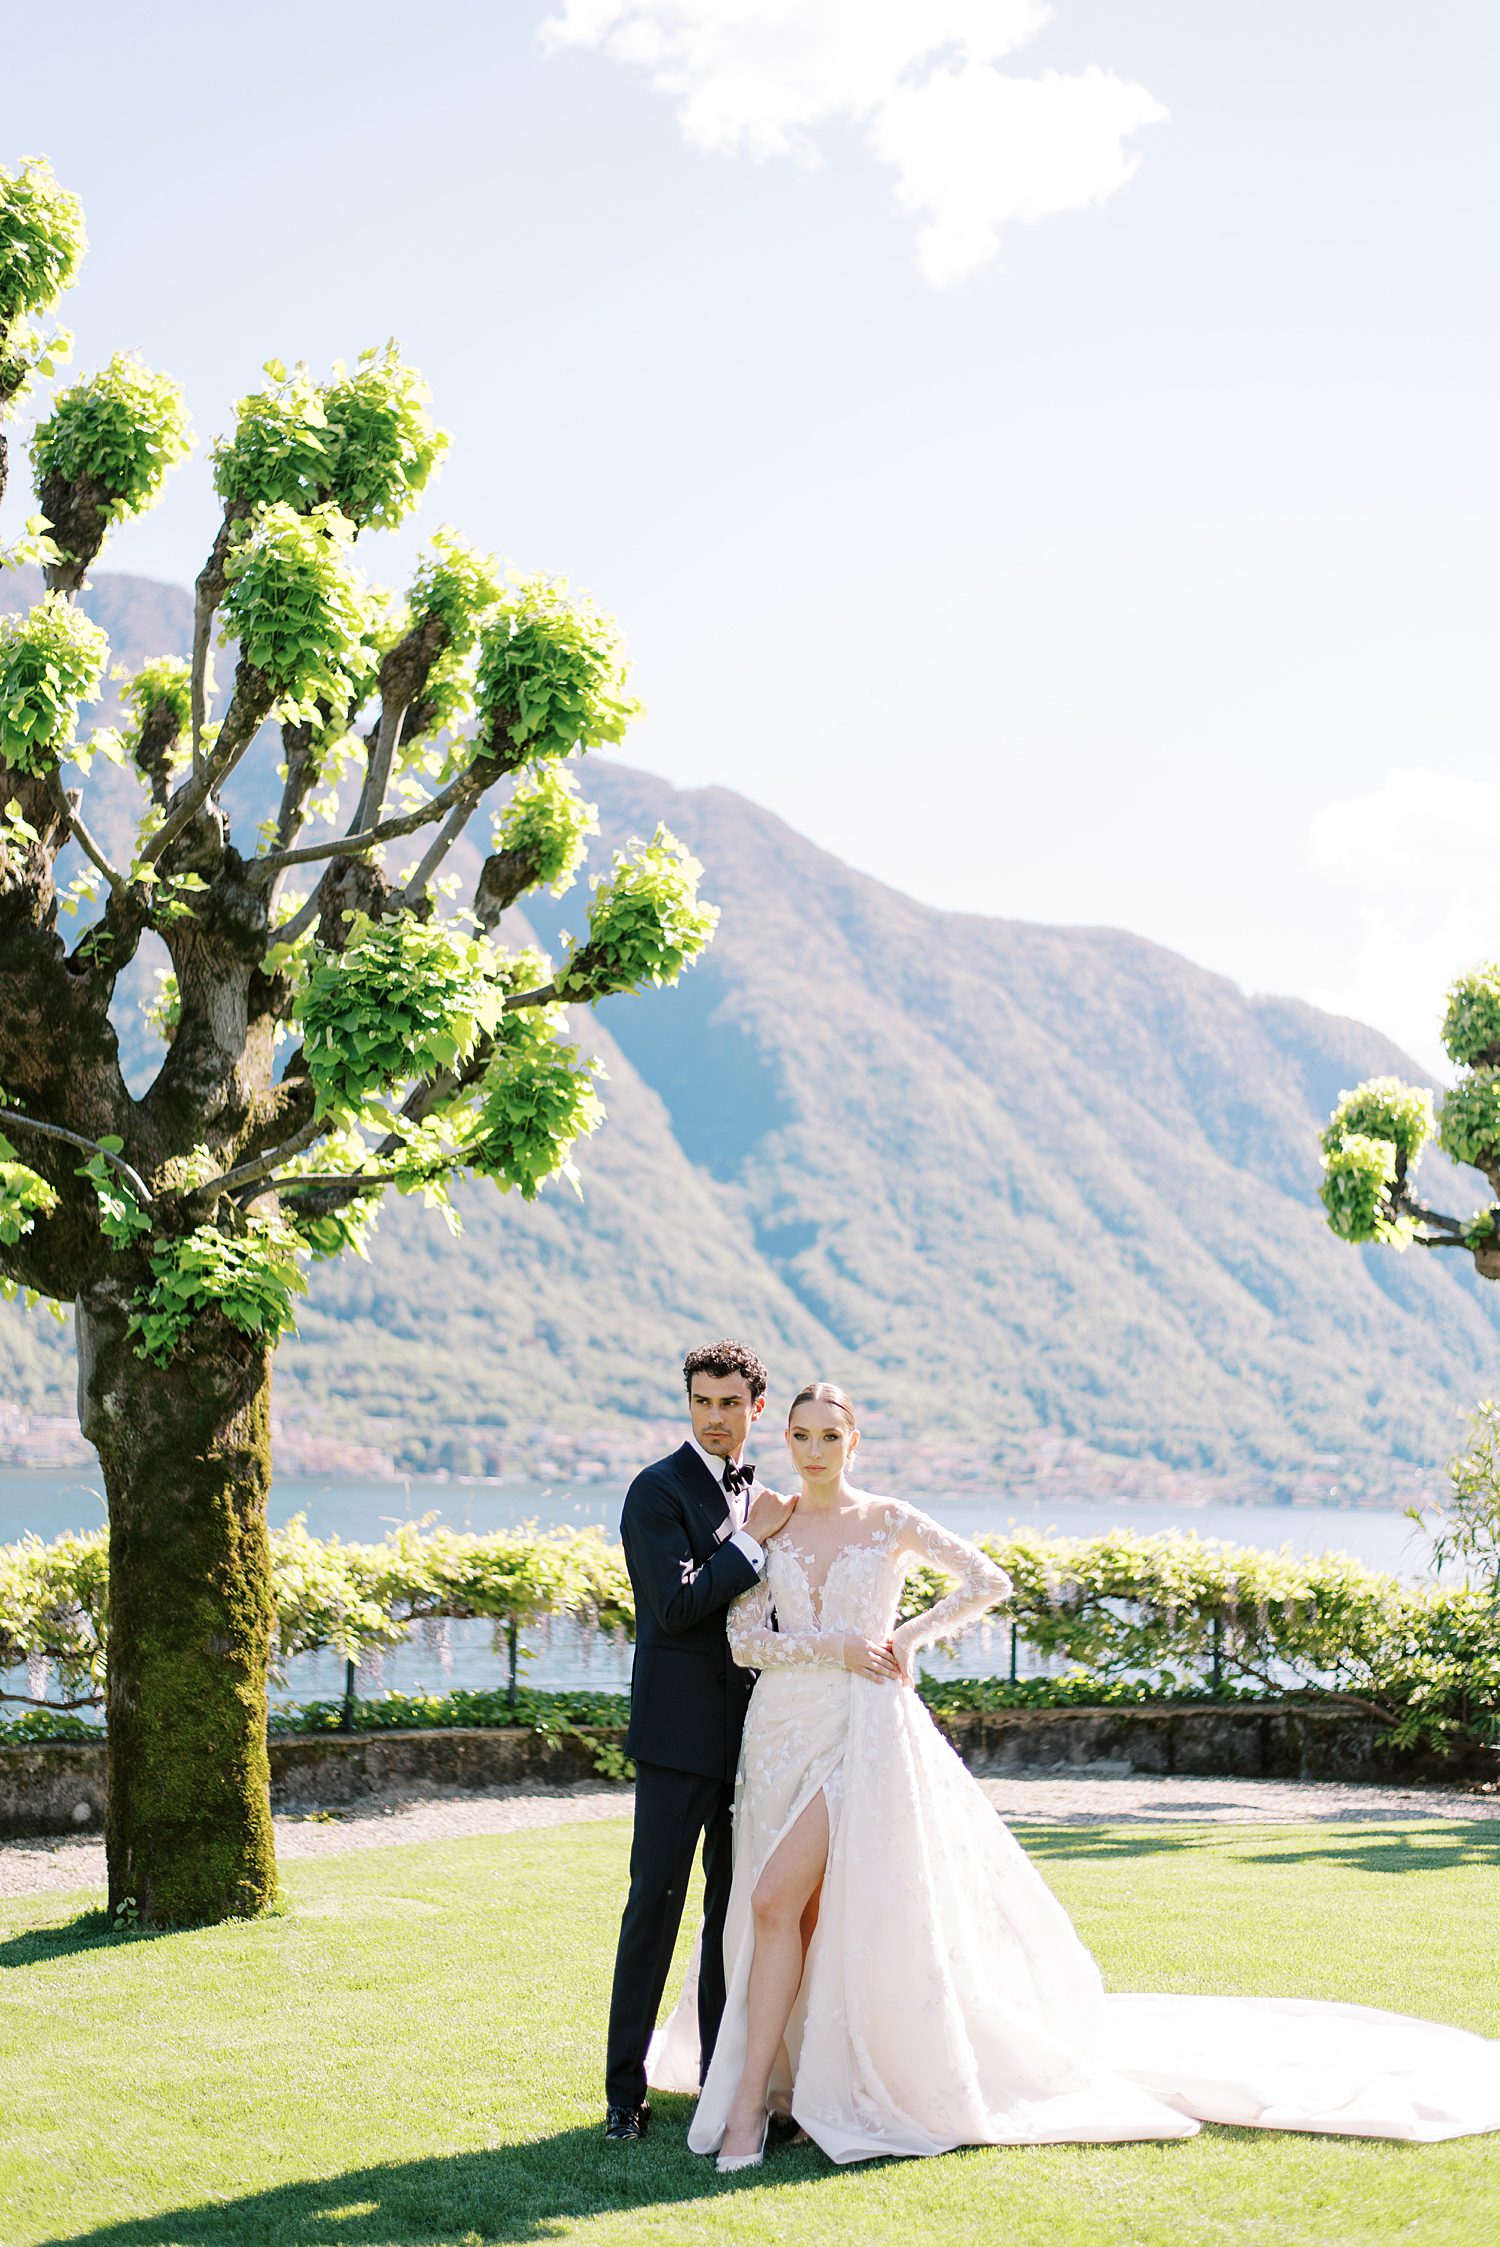 bride and groom hug on lawn at Villa Balbiano near tall tree